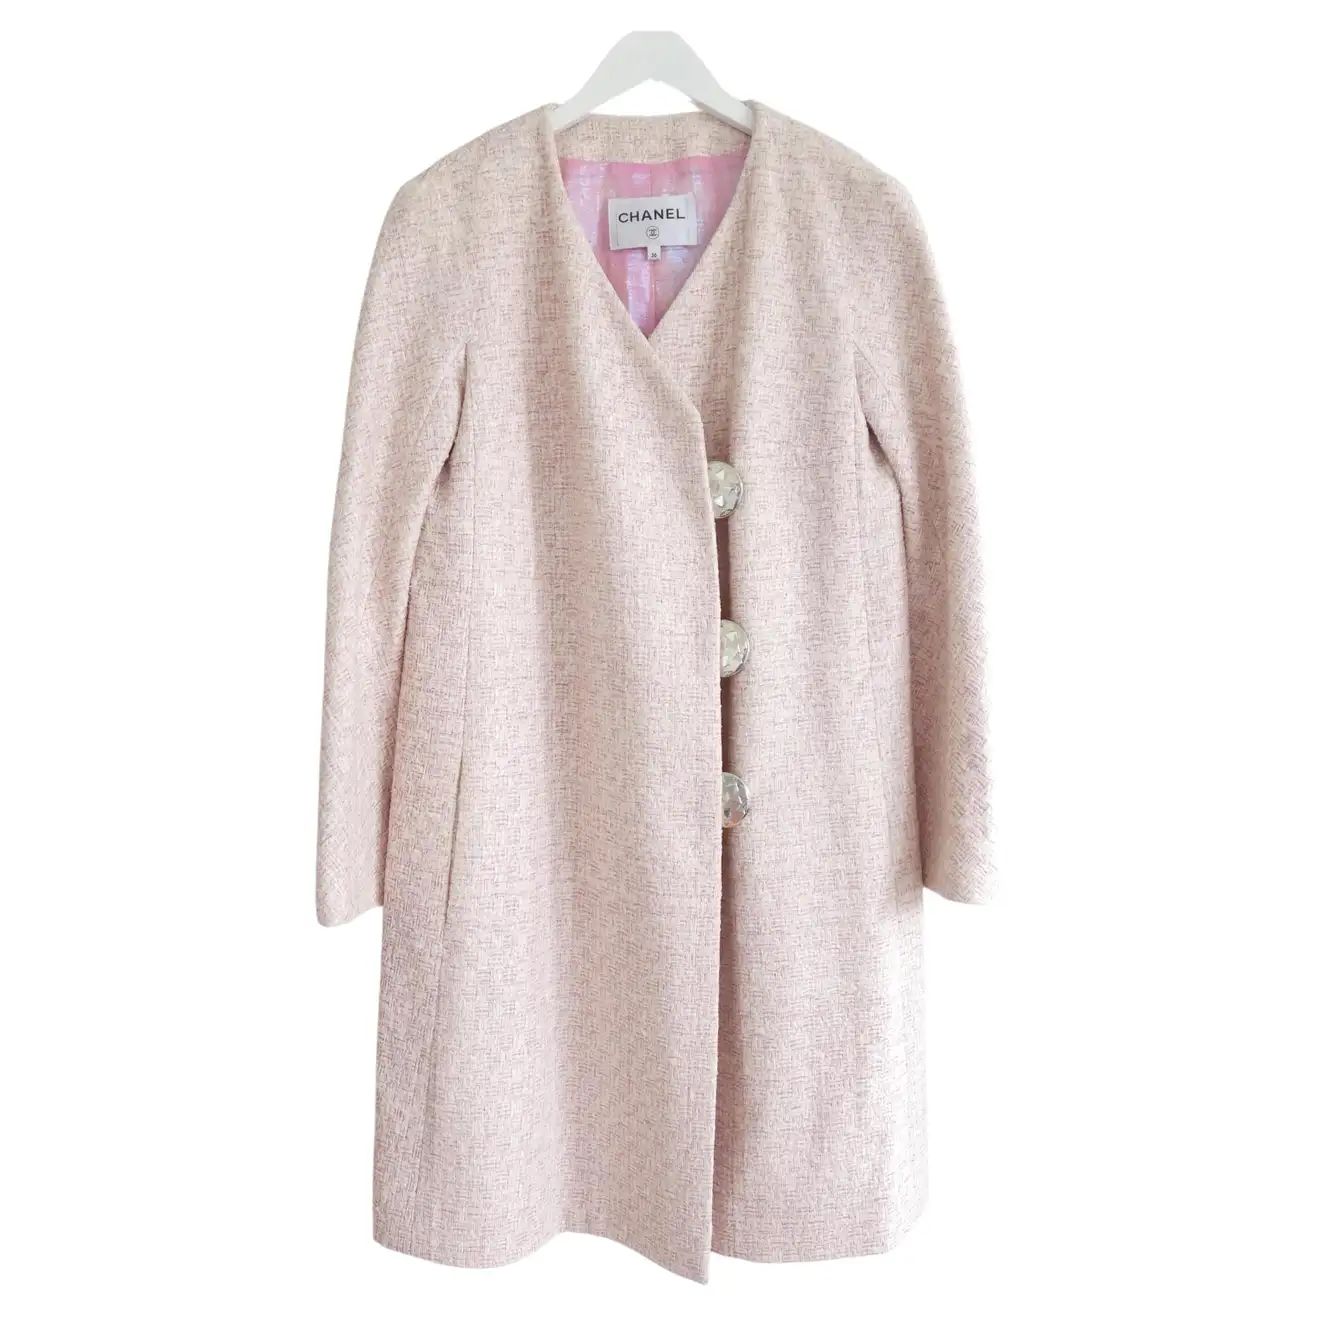 Chanel Spring 2016 Candy Pink Fantasy Tweed Lightweight Coat | 1stDibs